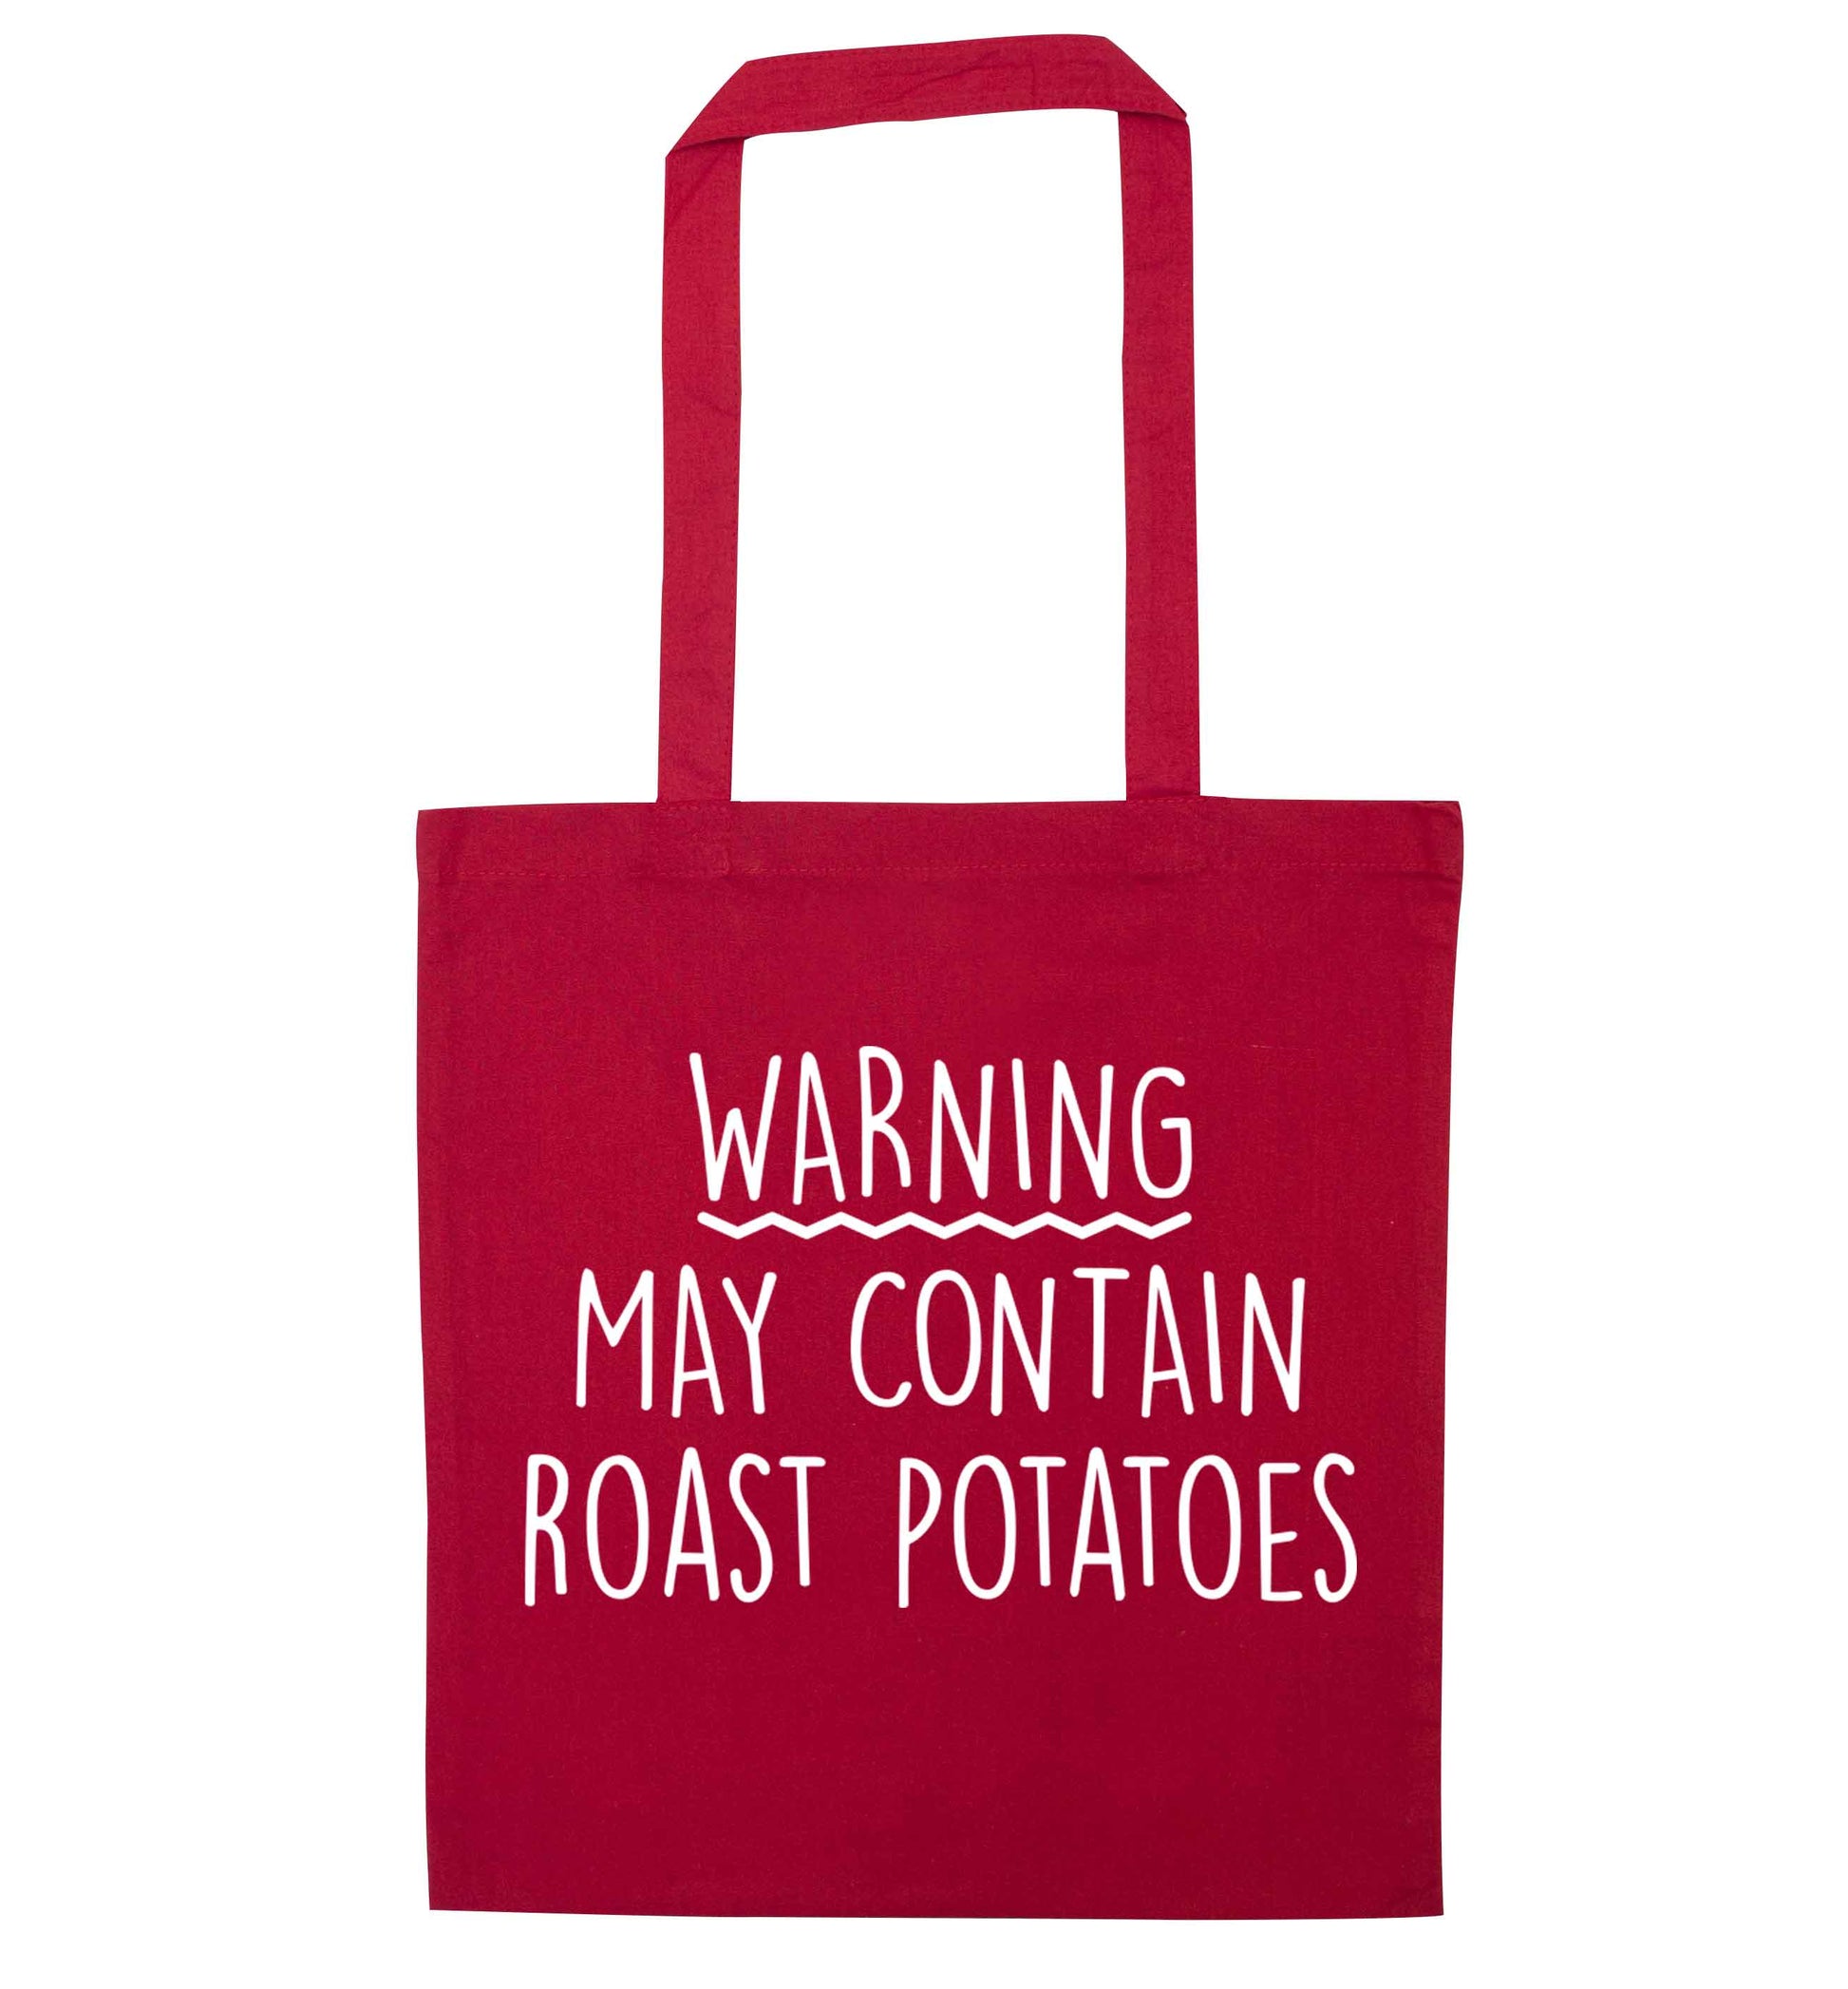 Warning may containg roast potatoes red tote bag